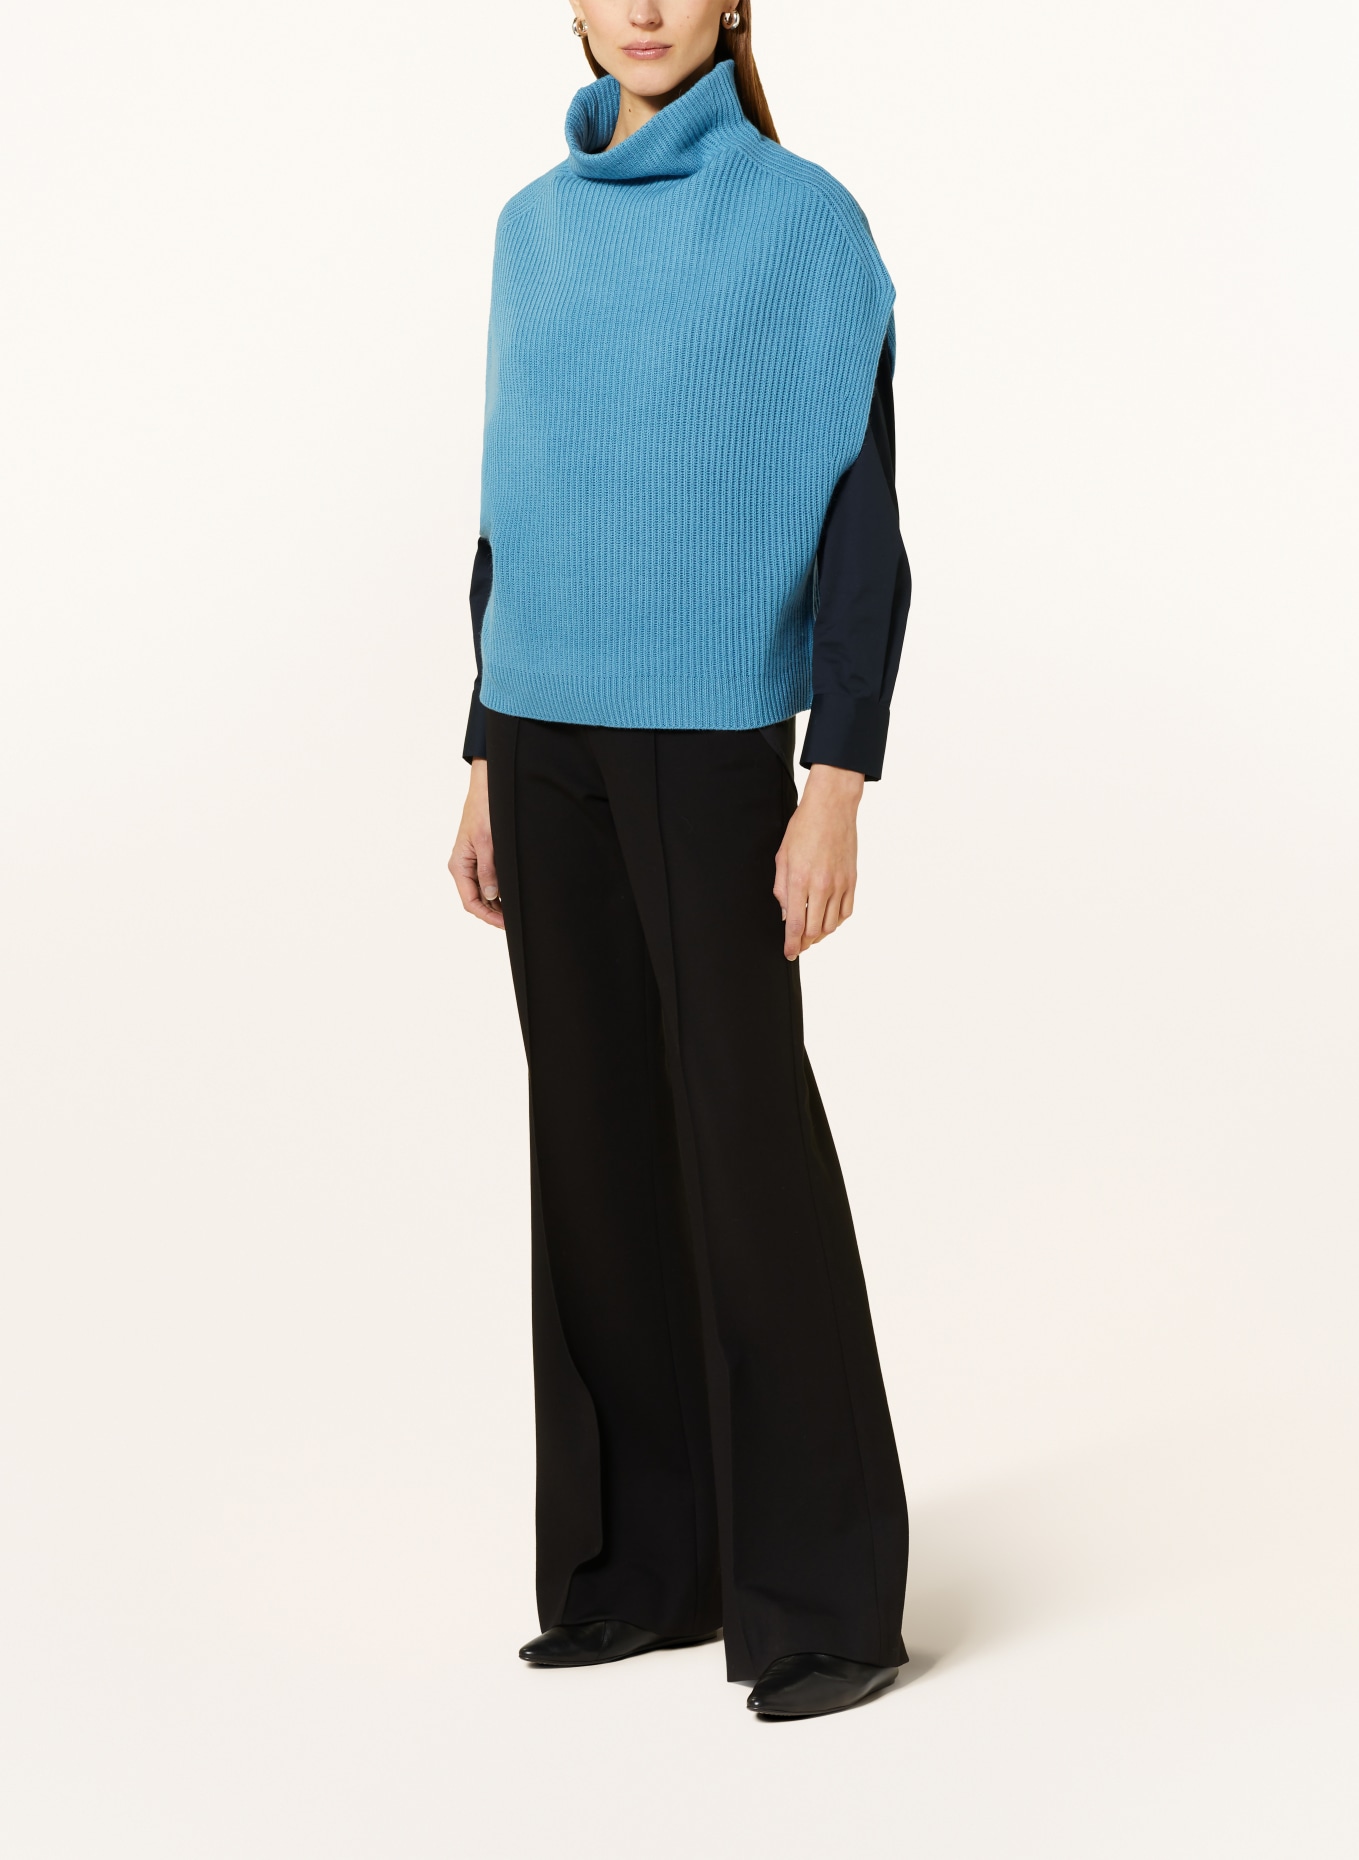 HERZEN'S ANGELEGENHEIT Sweater vest with cashmere, Color: LIGHT BLUE (Image 2)